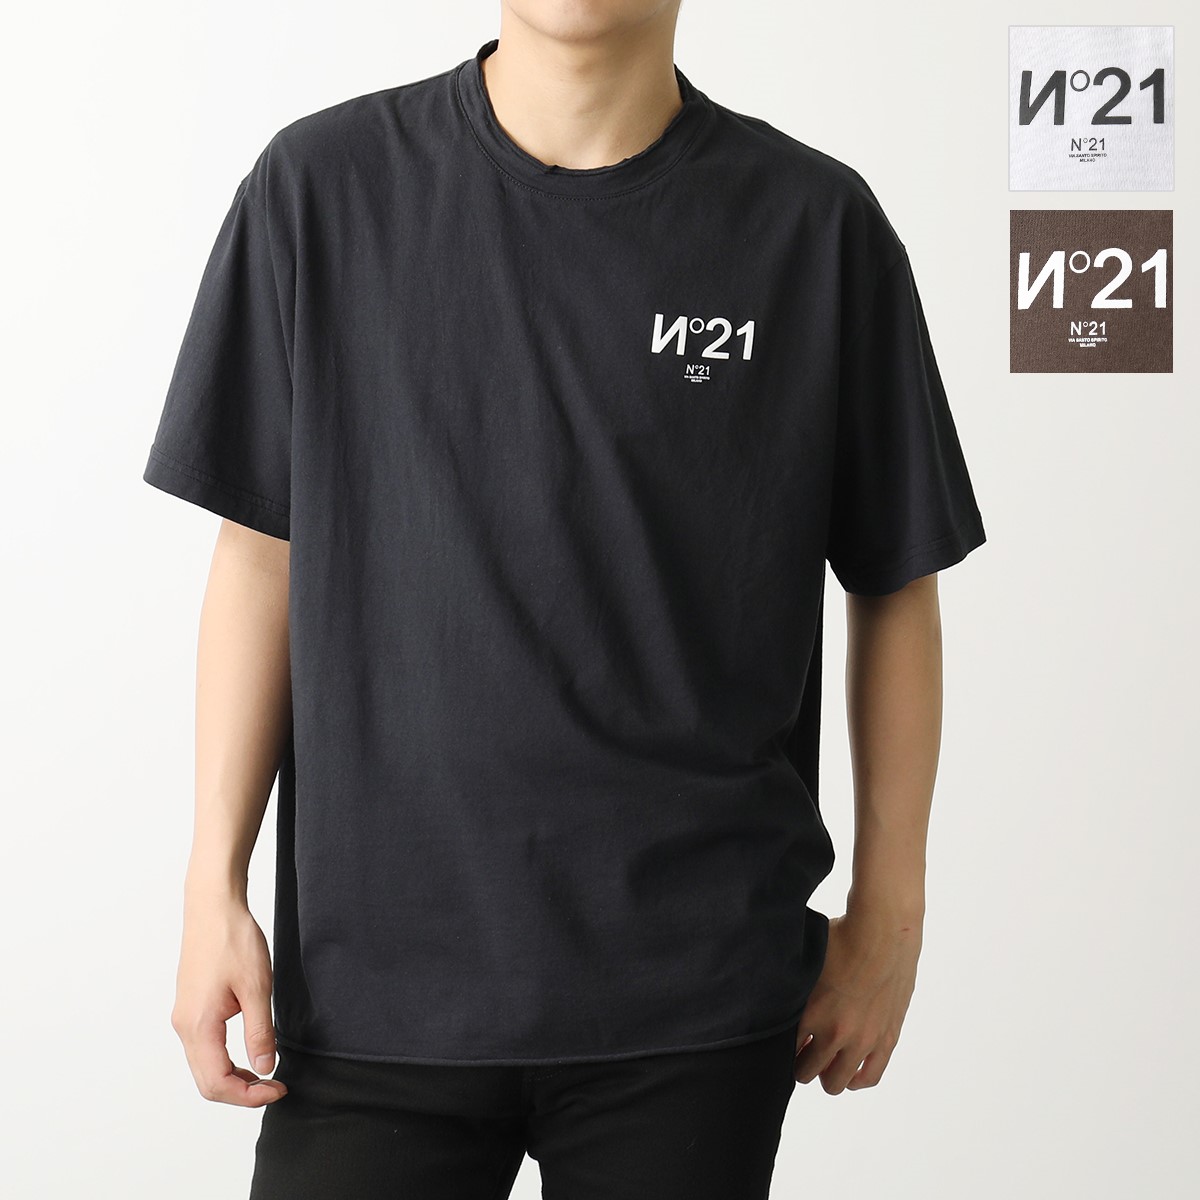 N°21 ヌメロヴェントゥーノ Tシャツ N1MO F011 6331 メンズ 半袖 カットソー コットン モックネック ロゴT カラー3色